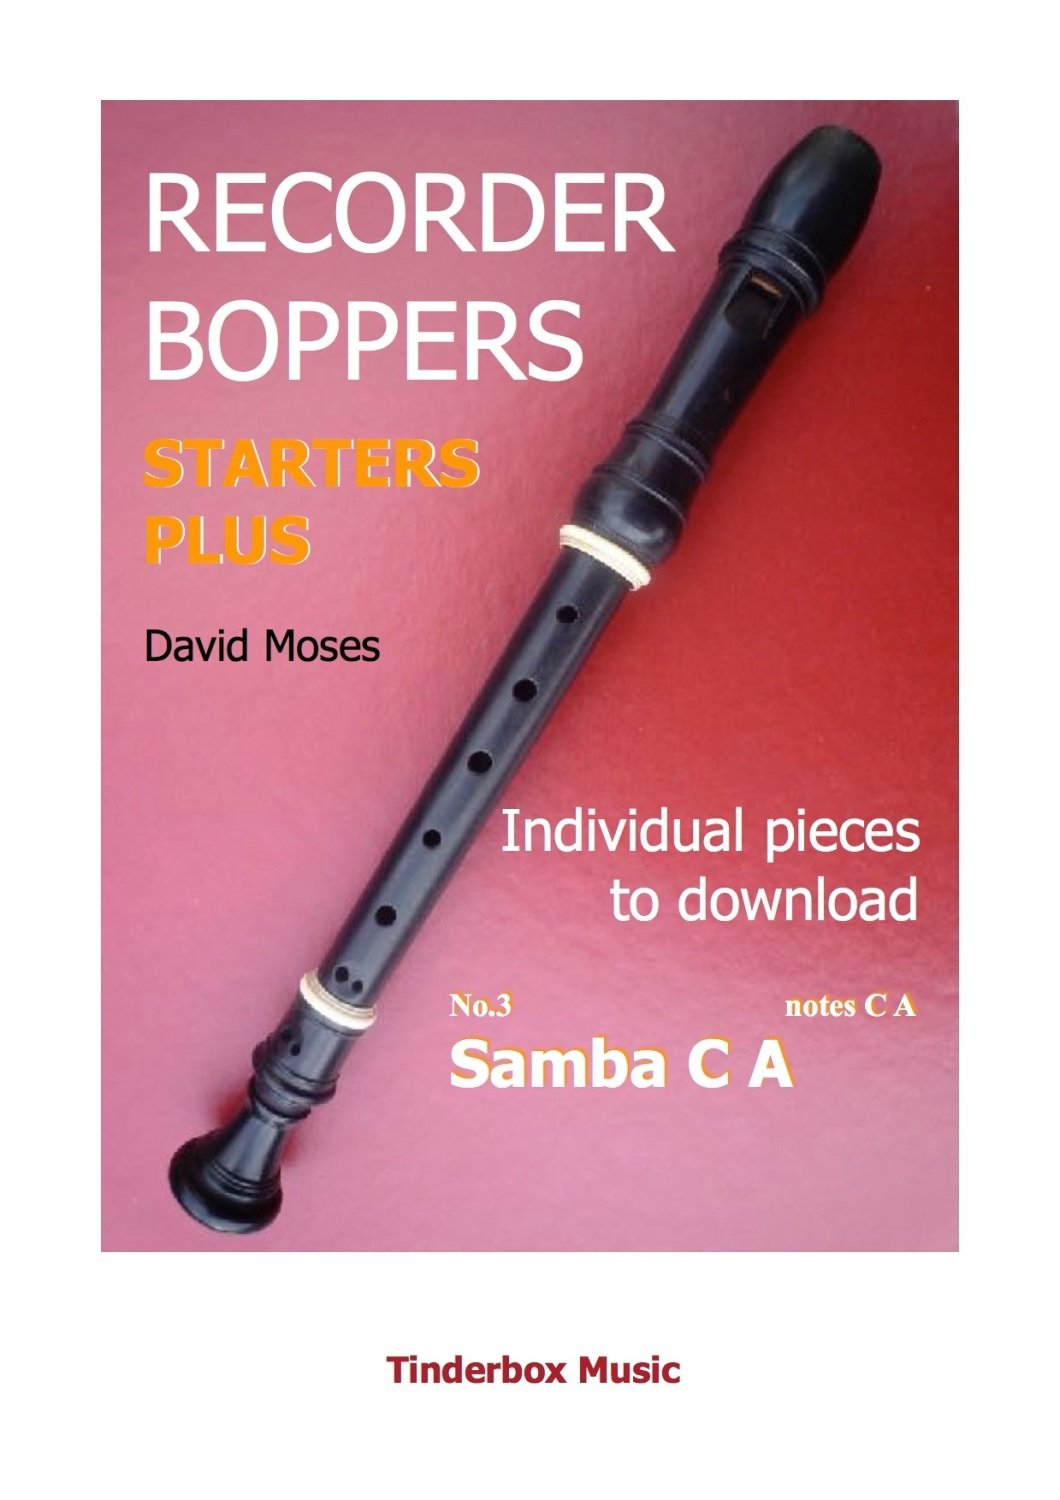 STARTERS PLUS individual pieces no.3  SAMBA C A  download